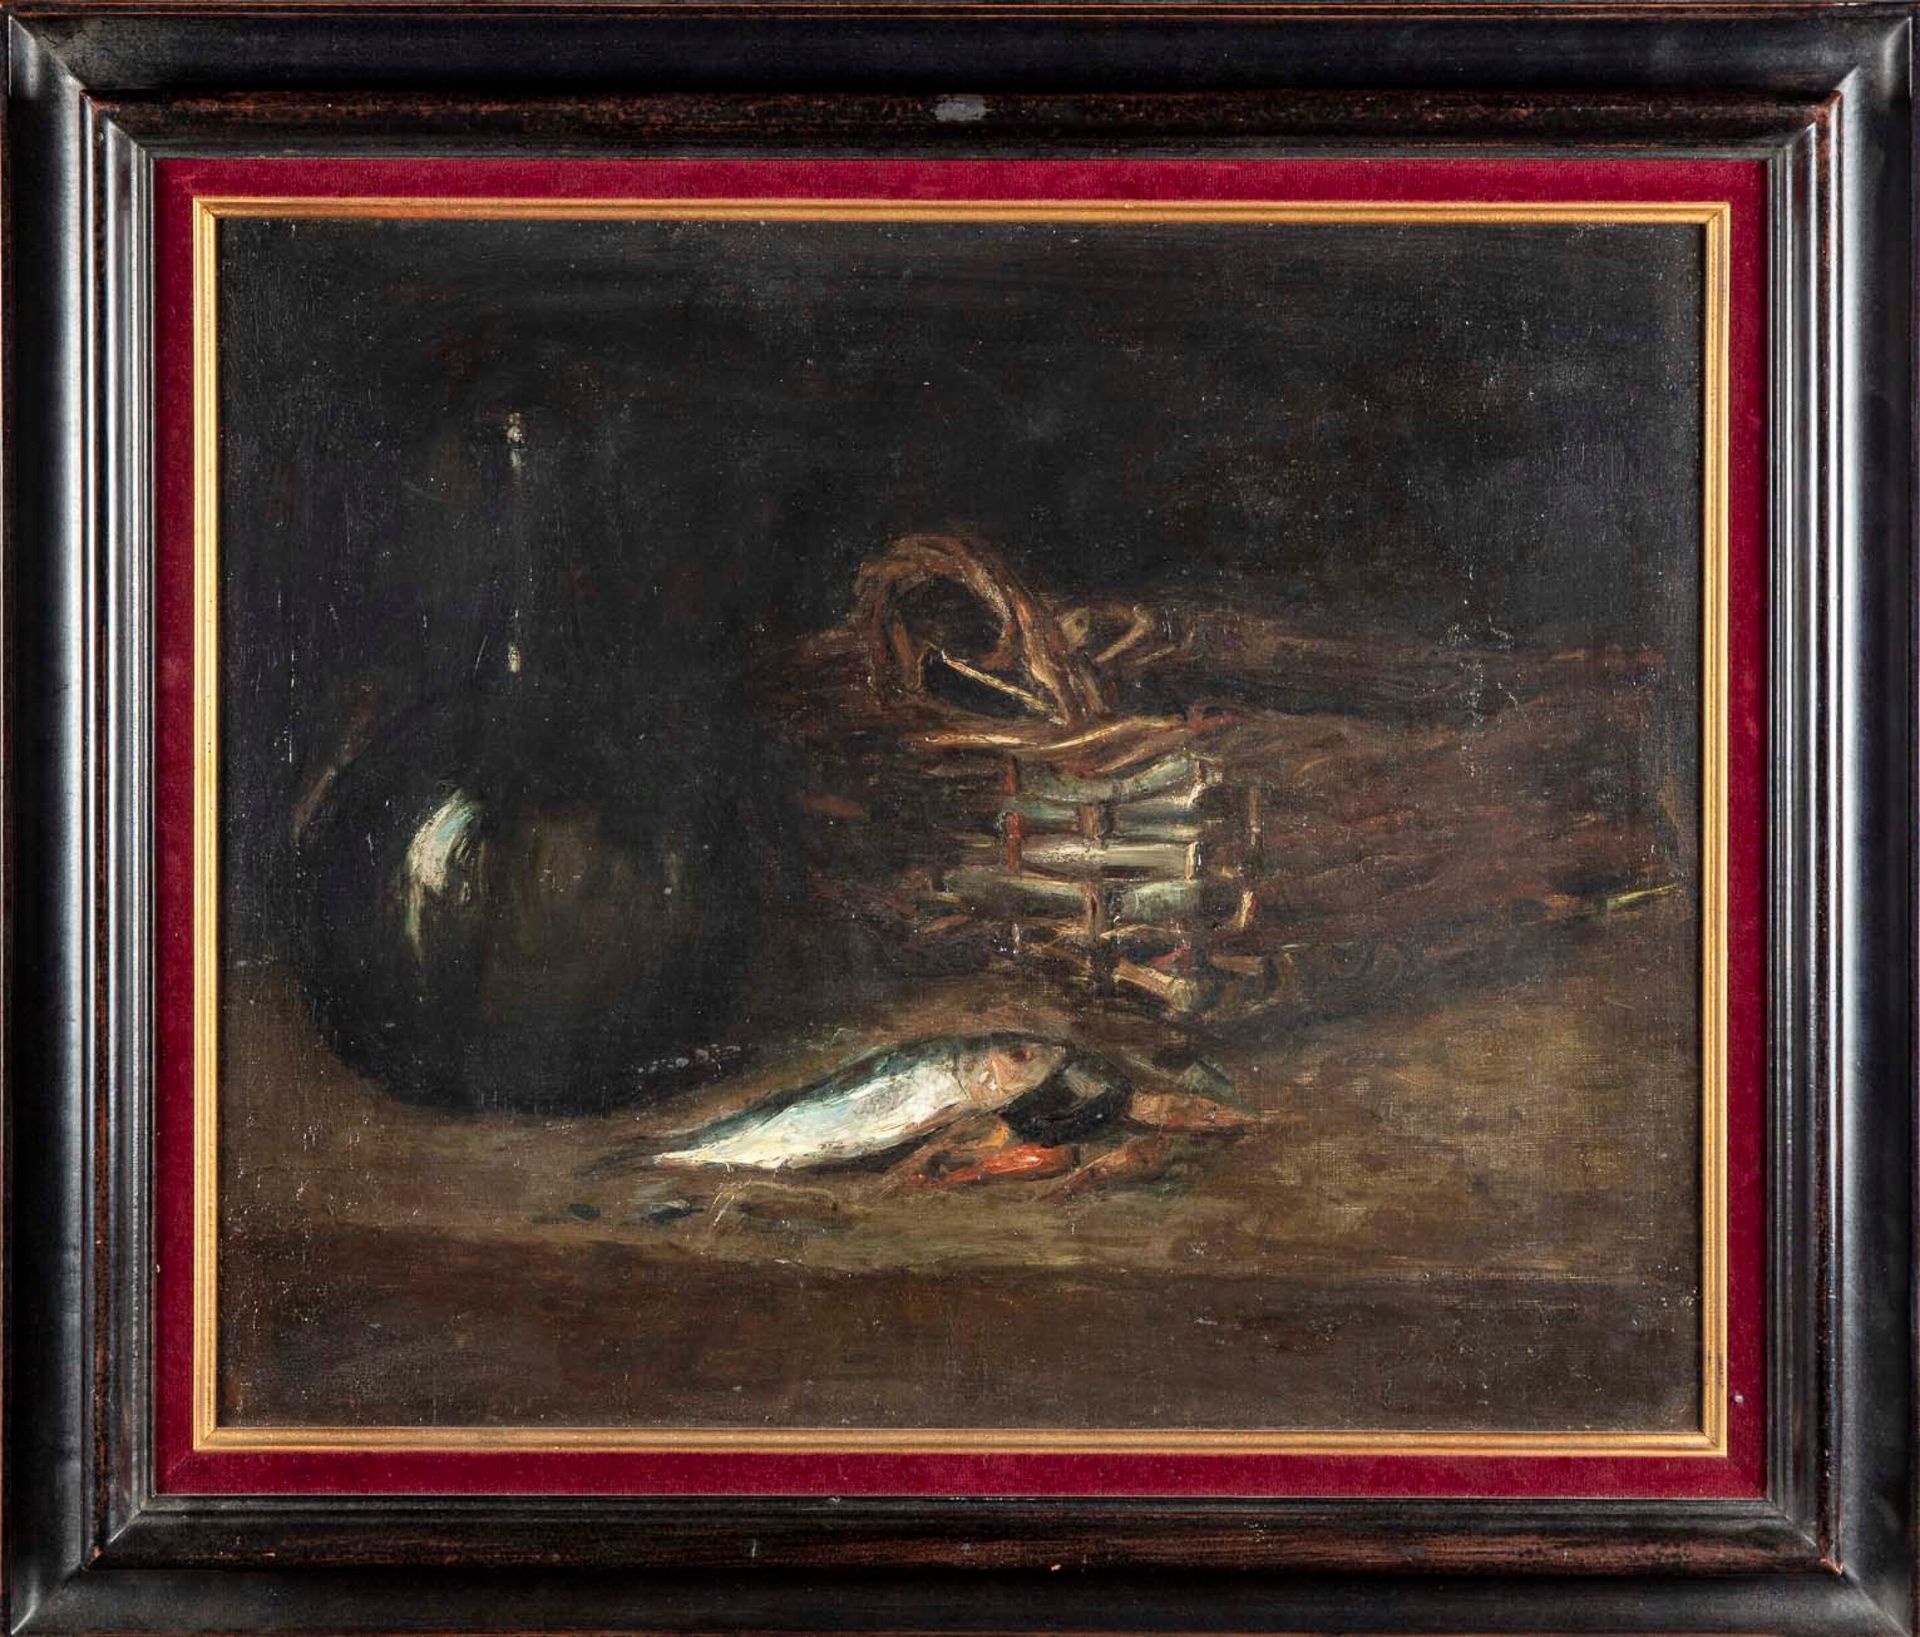 GERMAIN RIBAUT 热尔曼-里伯特(1845-1893)

沙丁鱼的静物

布面油画

右下方有签名

50 x 61厘米